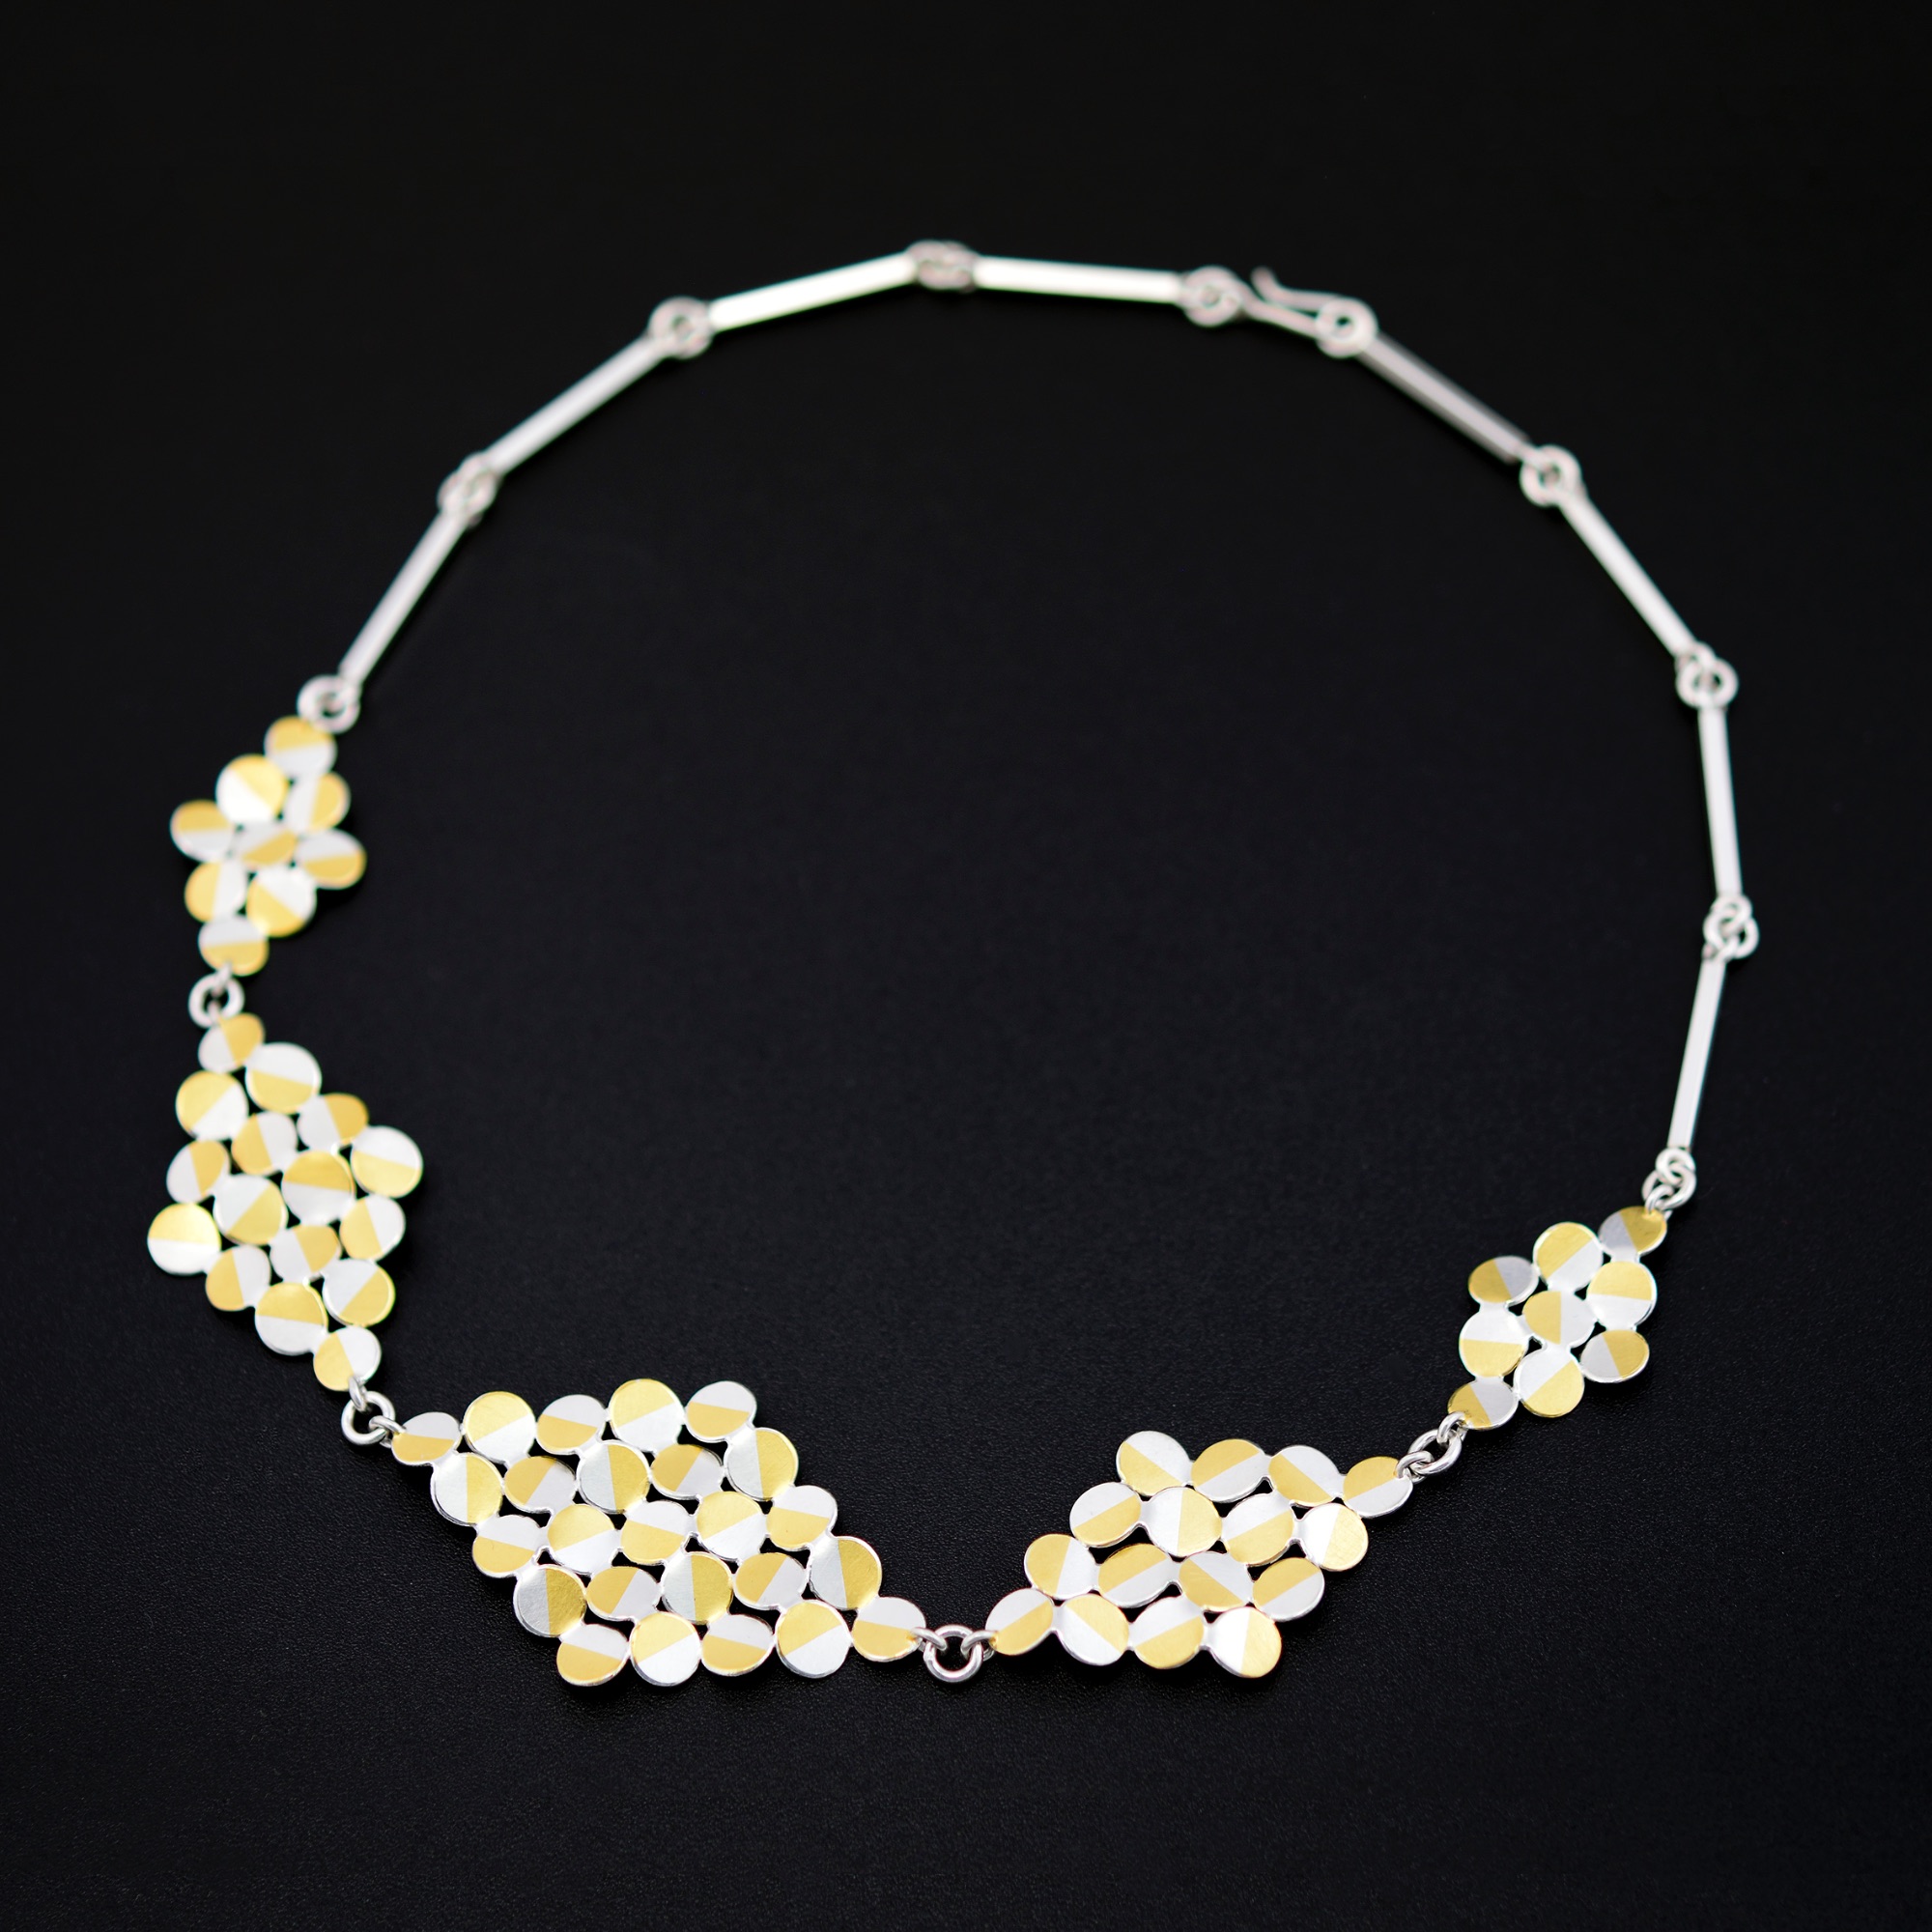 Rhombus reversible half chain necklace